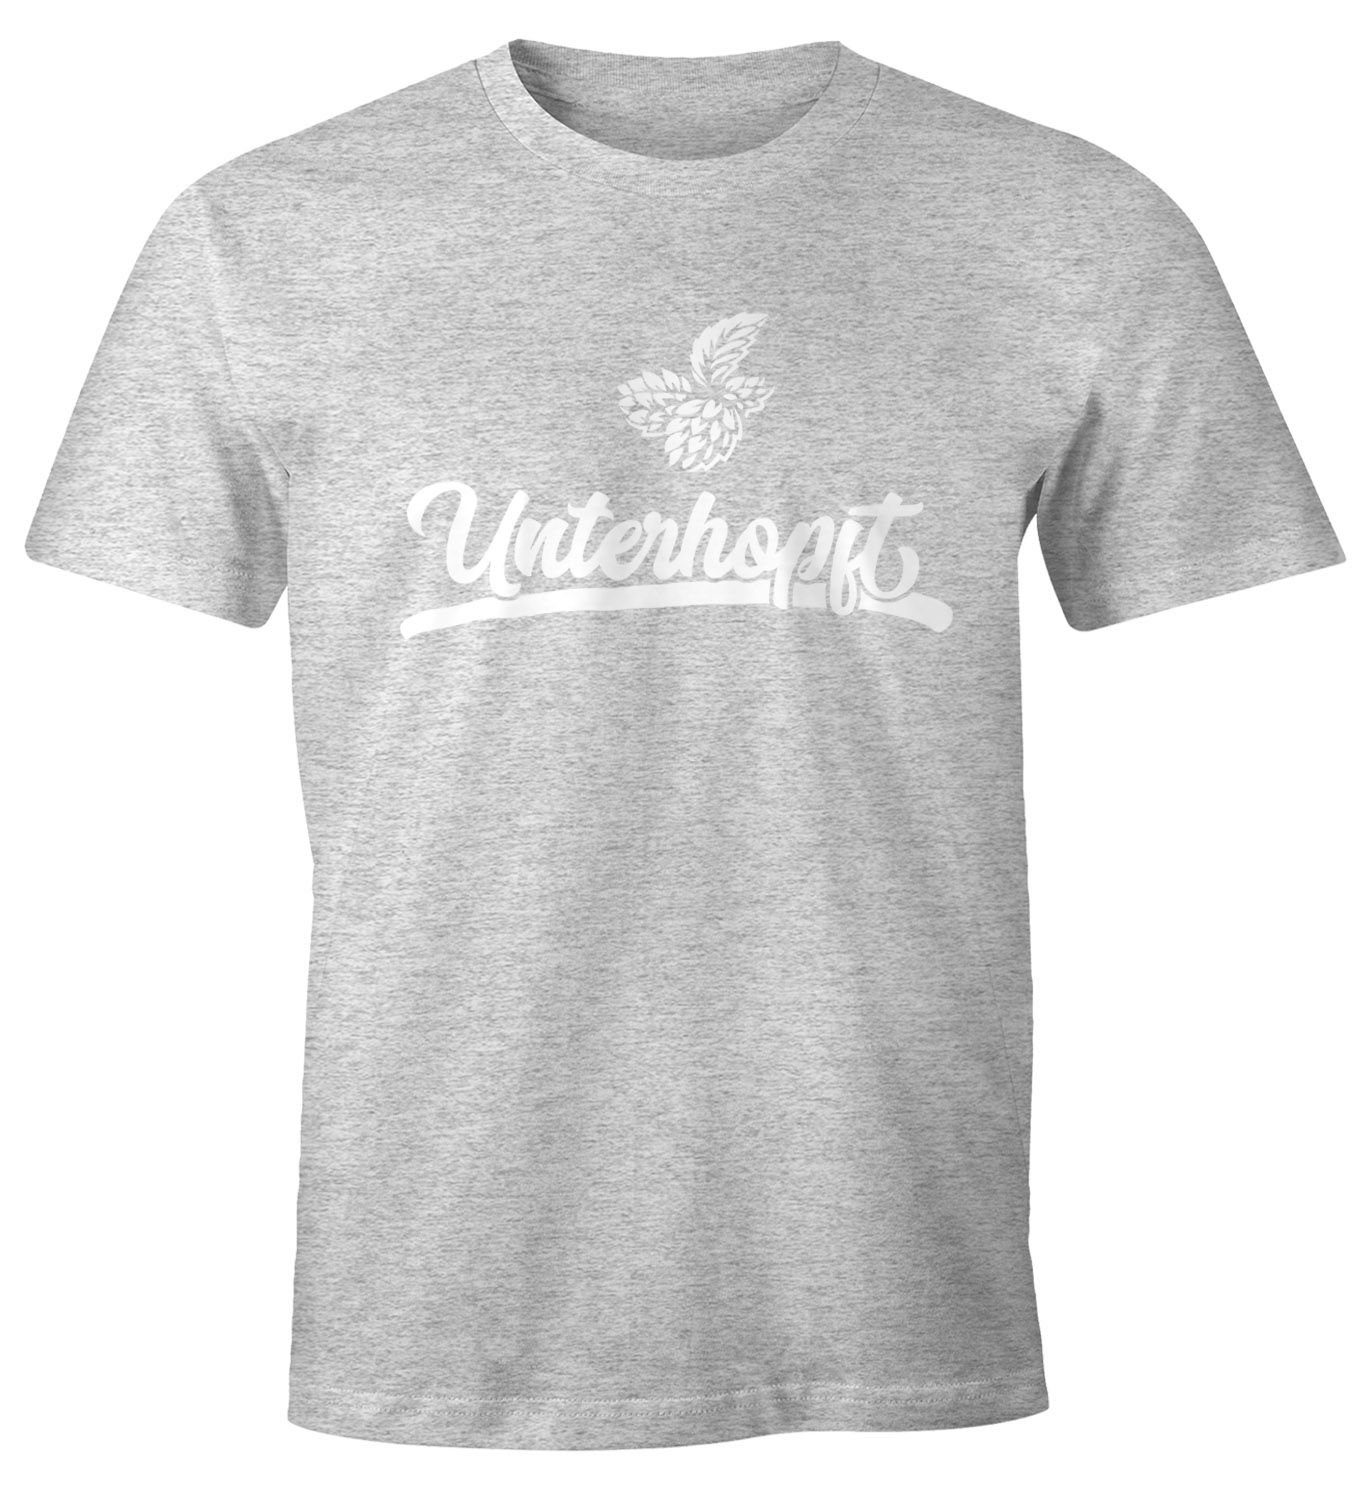 MoonWorks Print-Shirt Herren Party T-Shirt Unterhopft Bier Fun-Shirt Moonworks® mit Print grau | T-Shirts